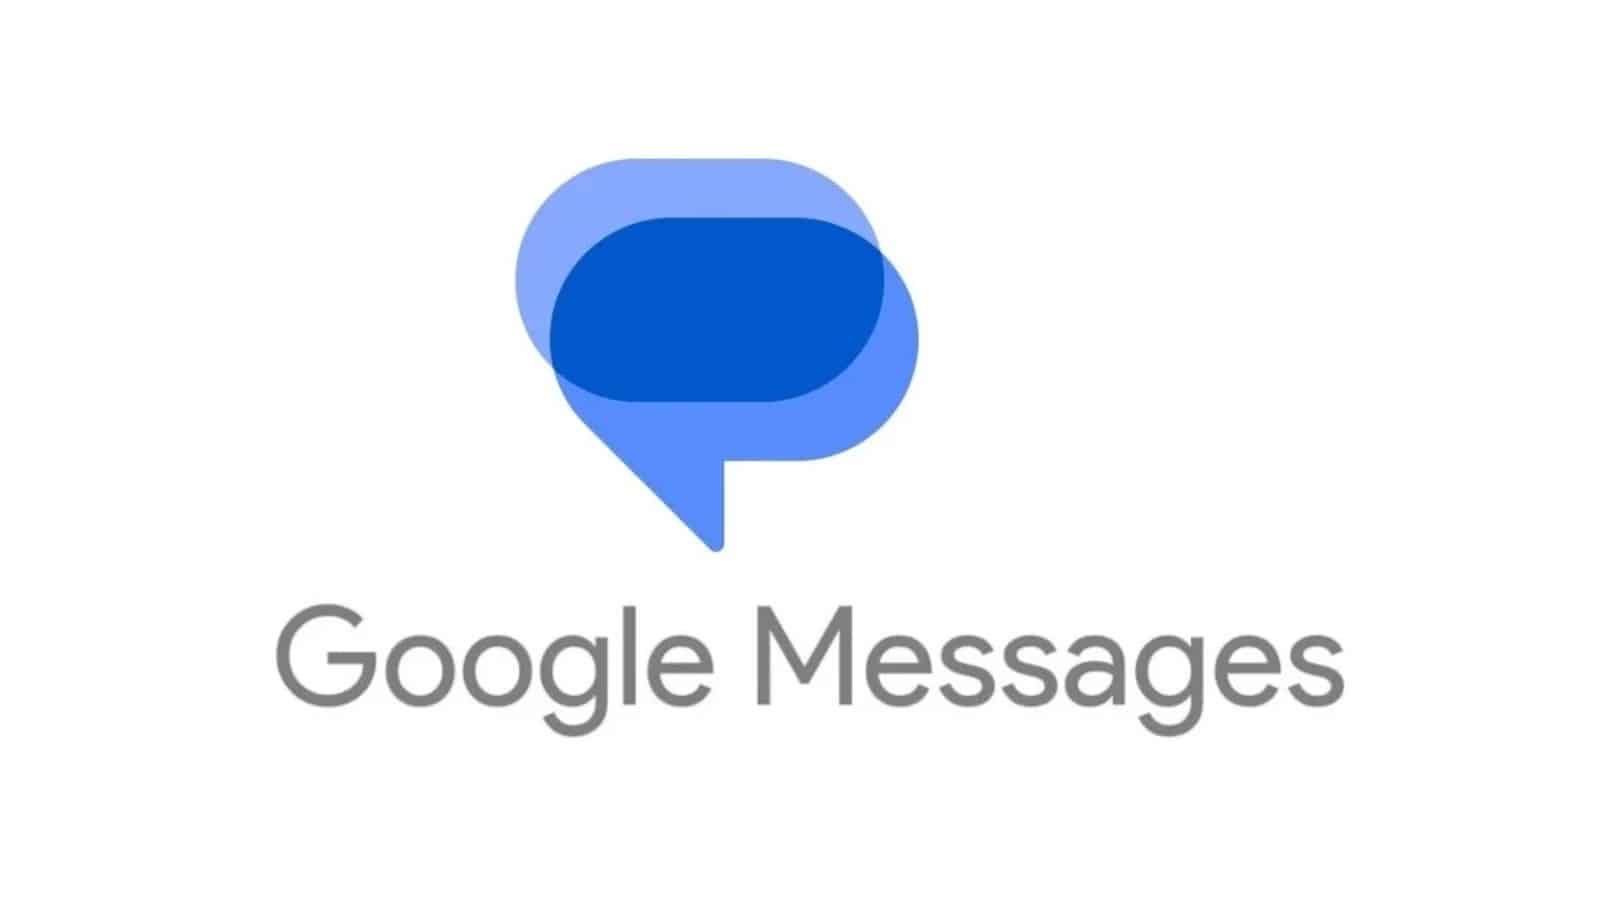 Google Messages: Ίσως αρχίσει σύντομα να υποστηρίζει προφίλ χρηστών